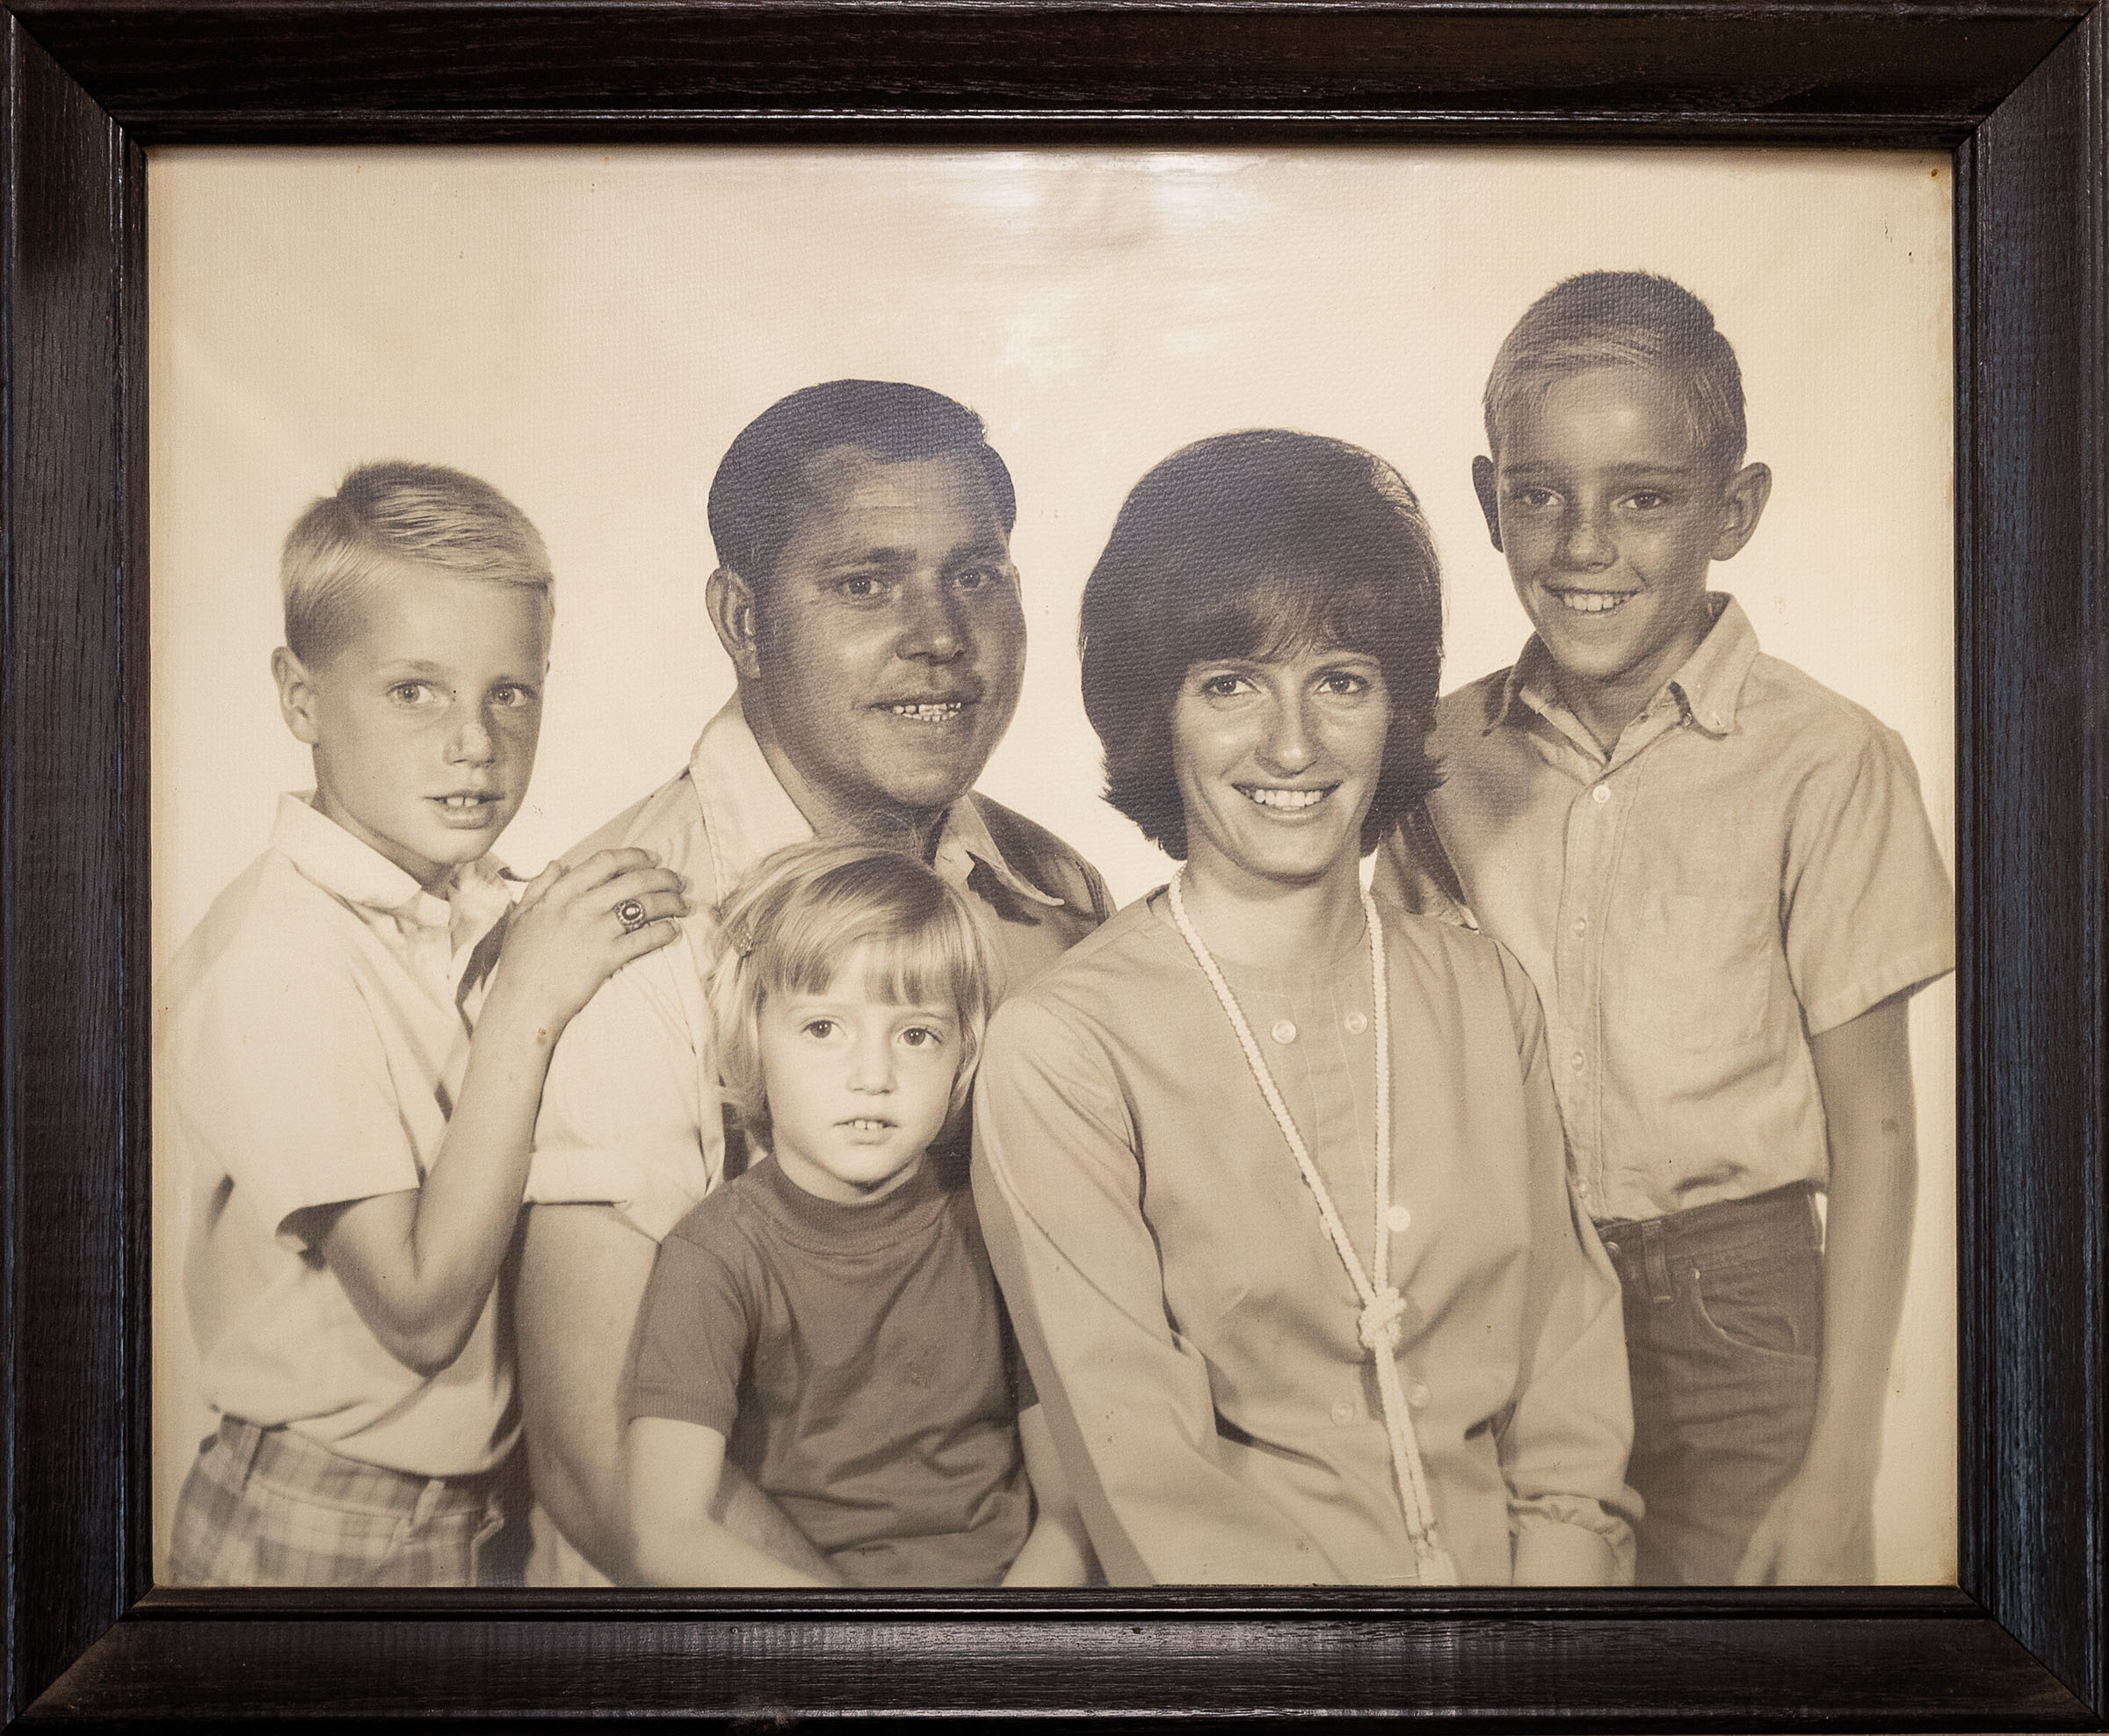 A sepia tone family portrait in a black frame